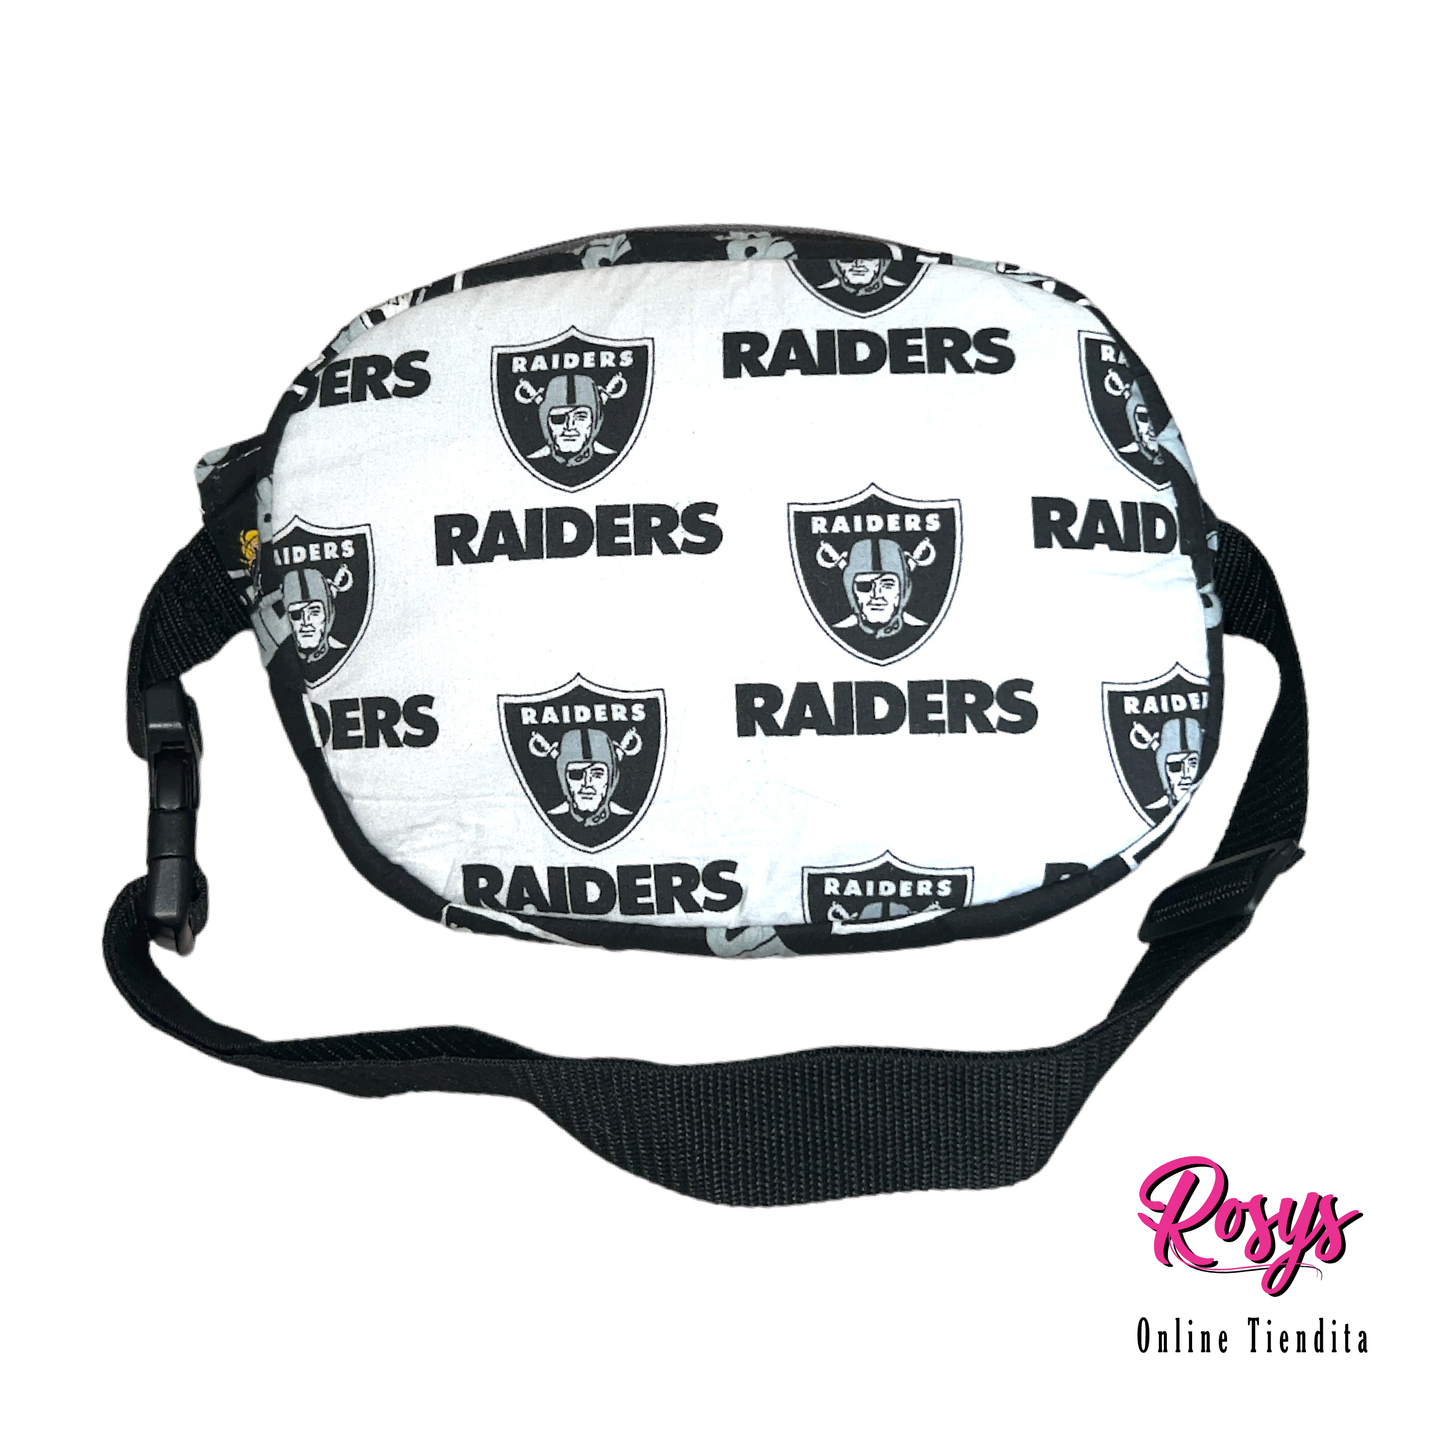 Raiders Football Fanny Pack | Handmade Belt Bag | Made By Rosy!